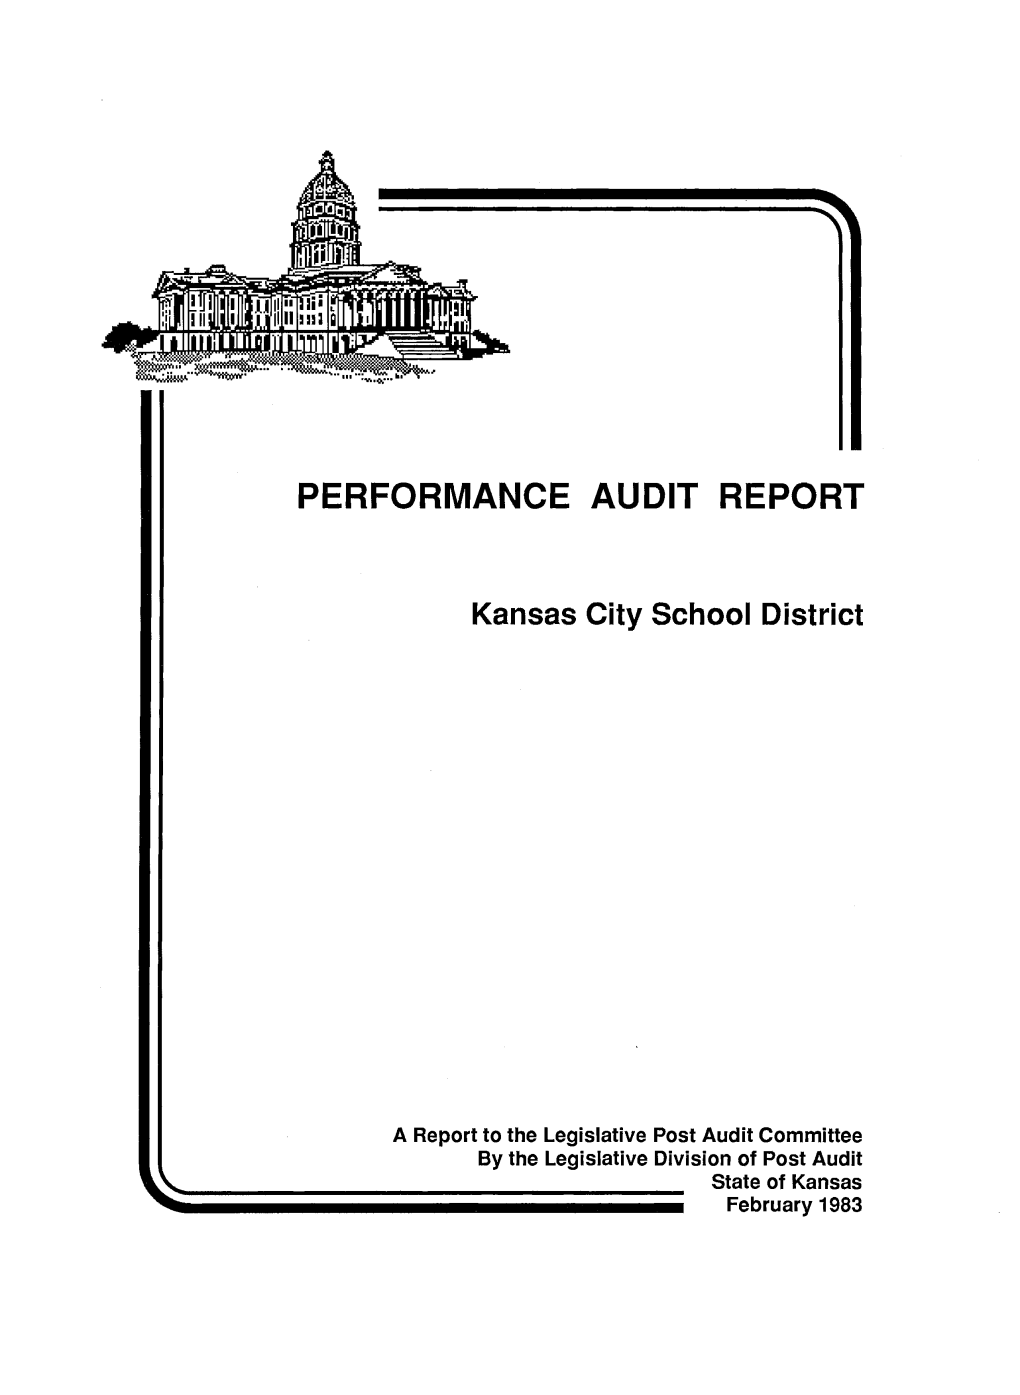 Performance Audit Report